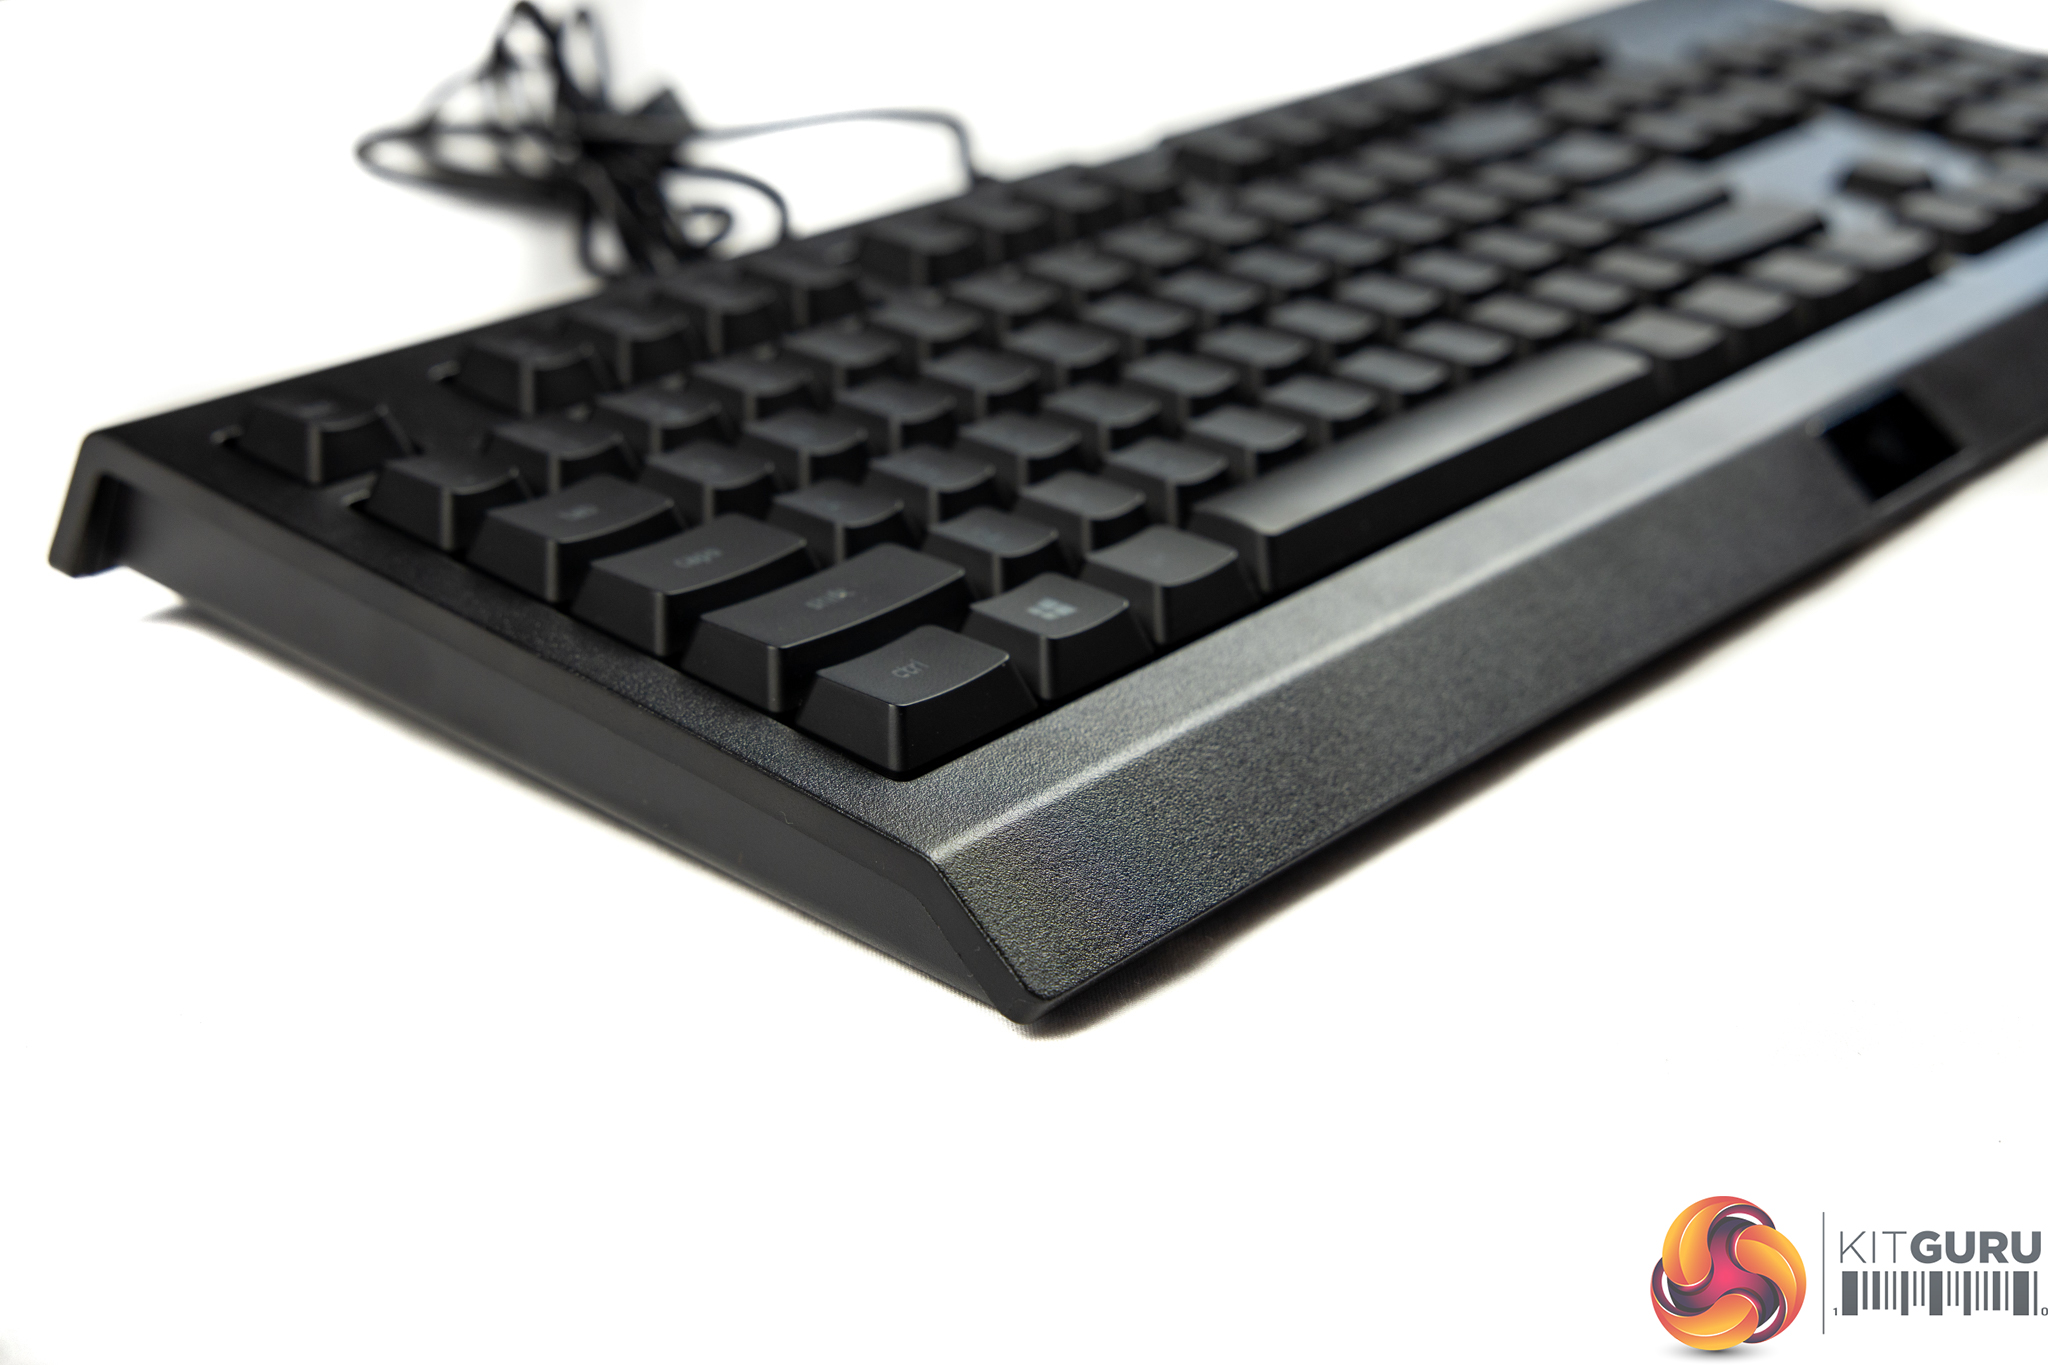 Keyboard Lite Razer Review KitGuru | Cynosa